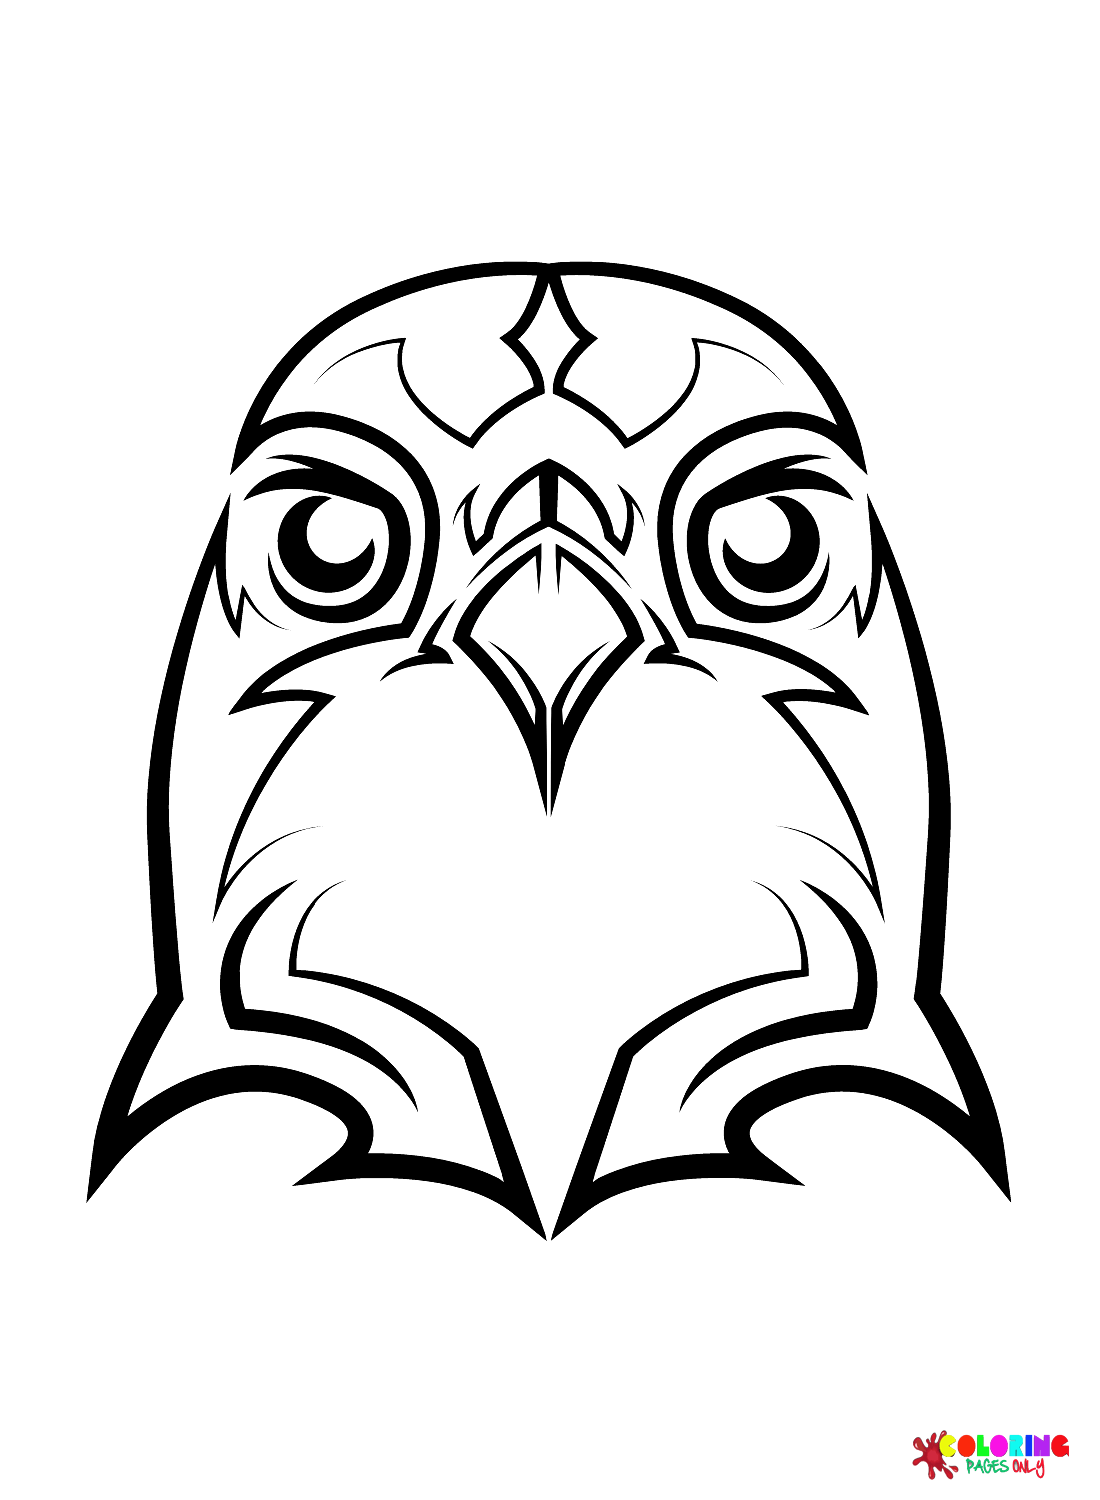 Falcon Head Coloring Page